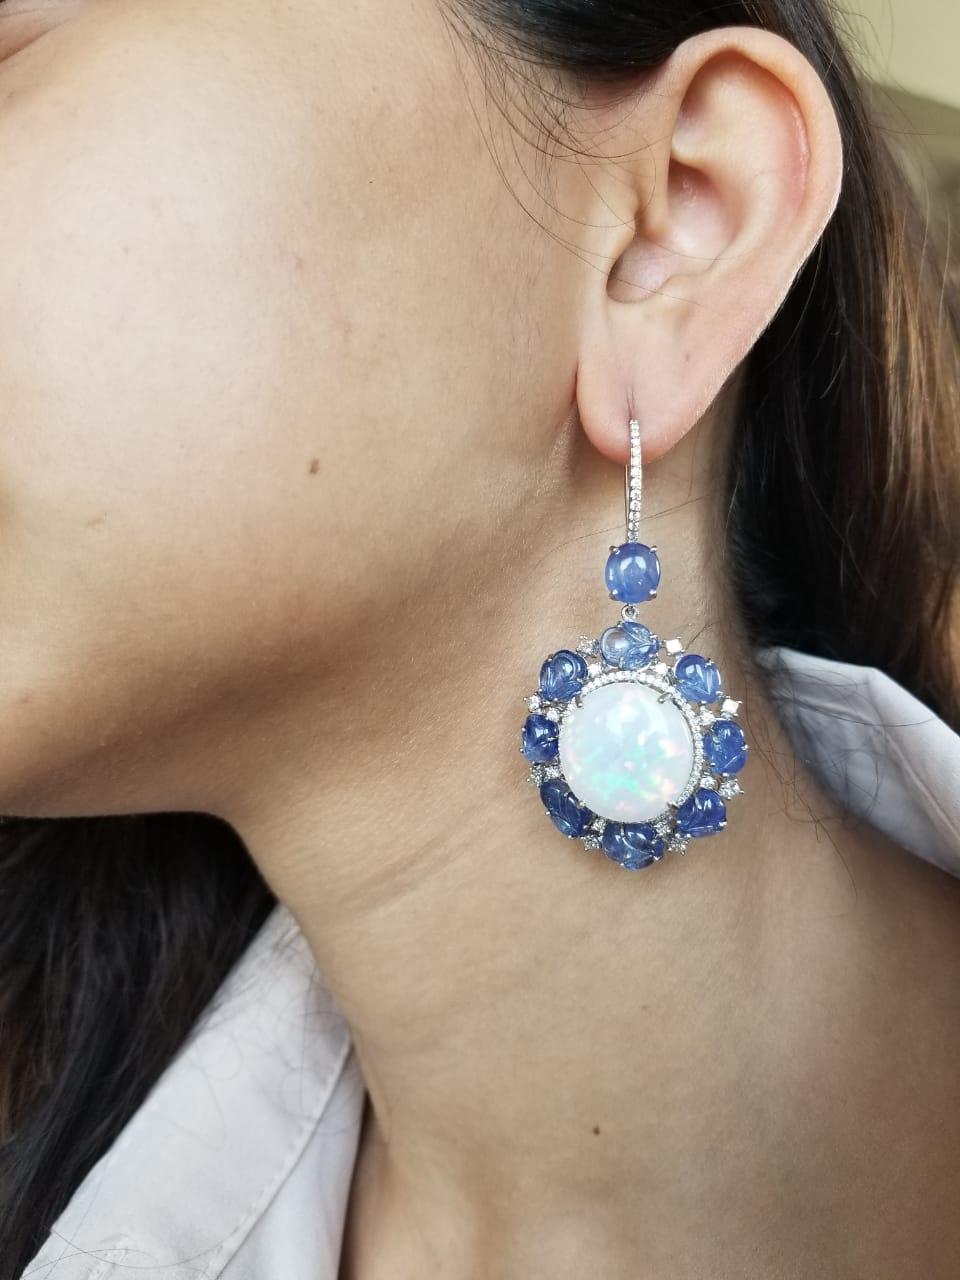 burmese sapphire earrings